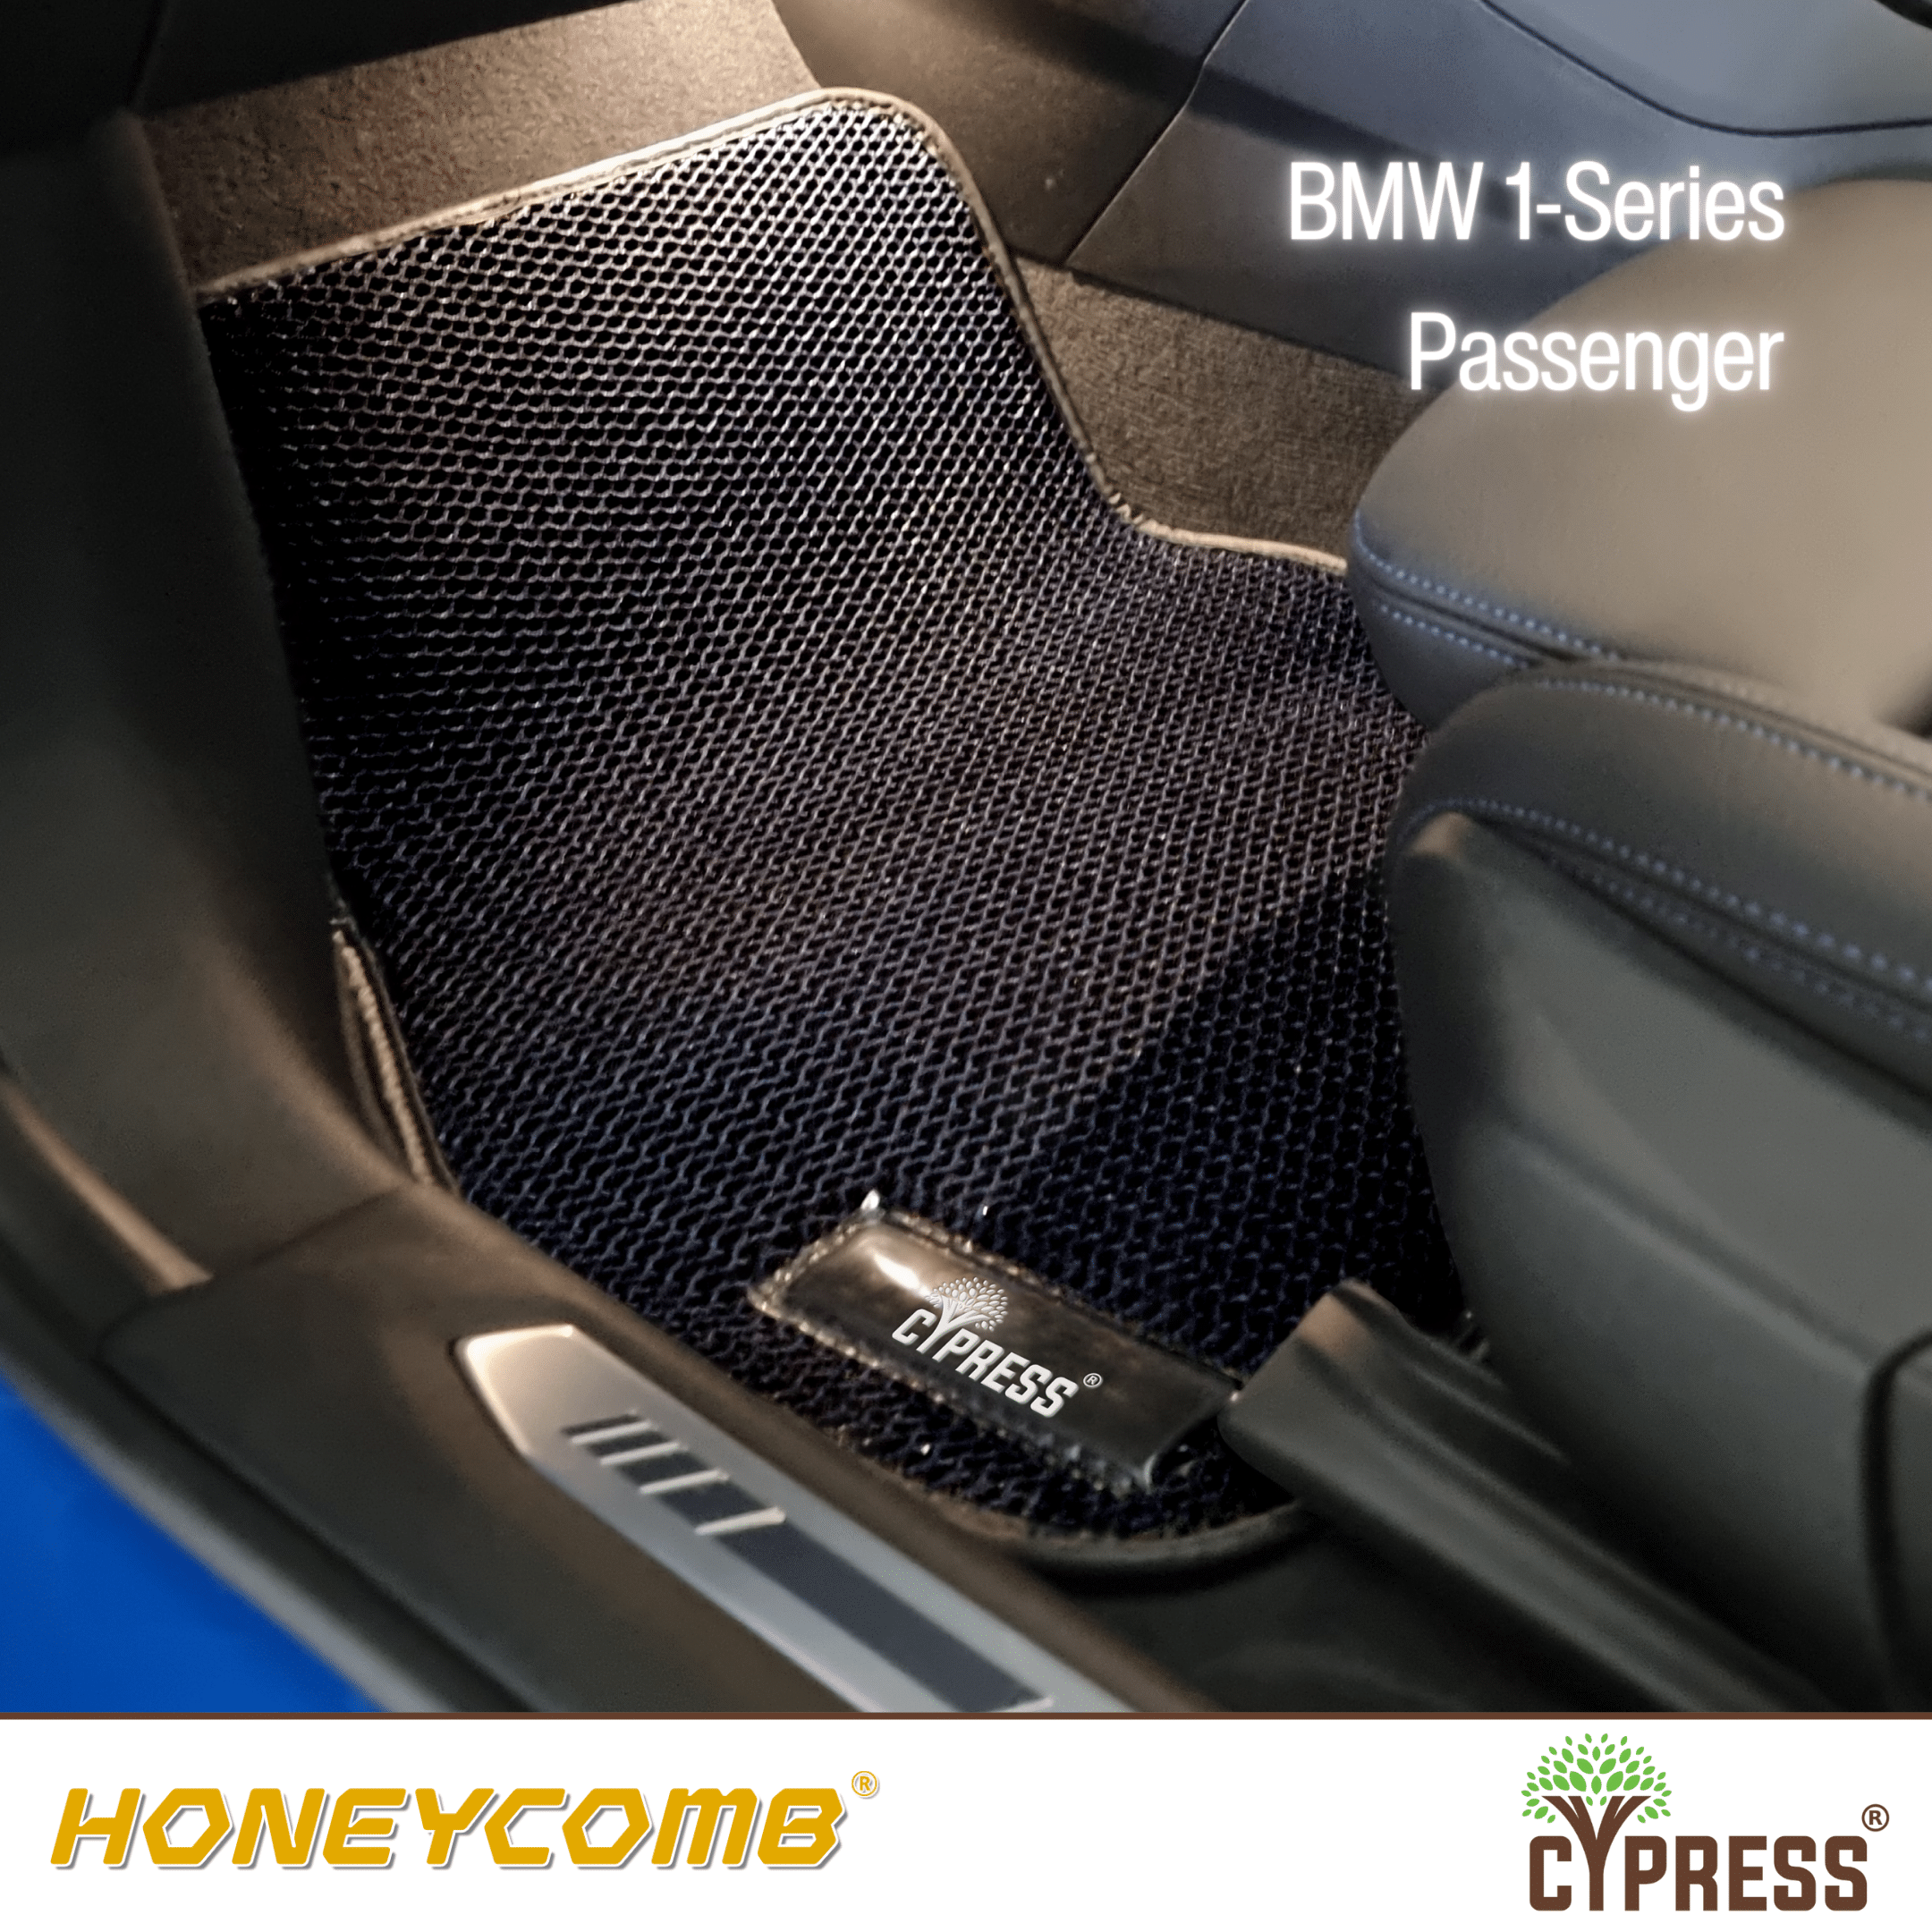 BMW 1-Series Honeycomb (Passenger)